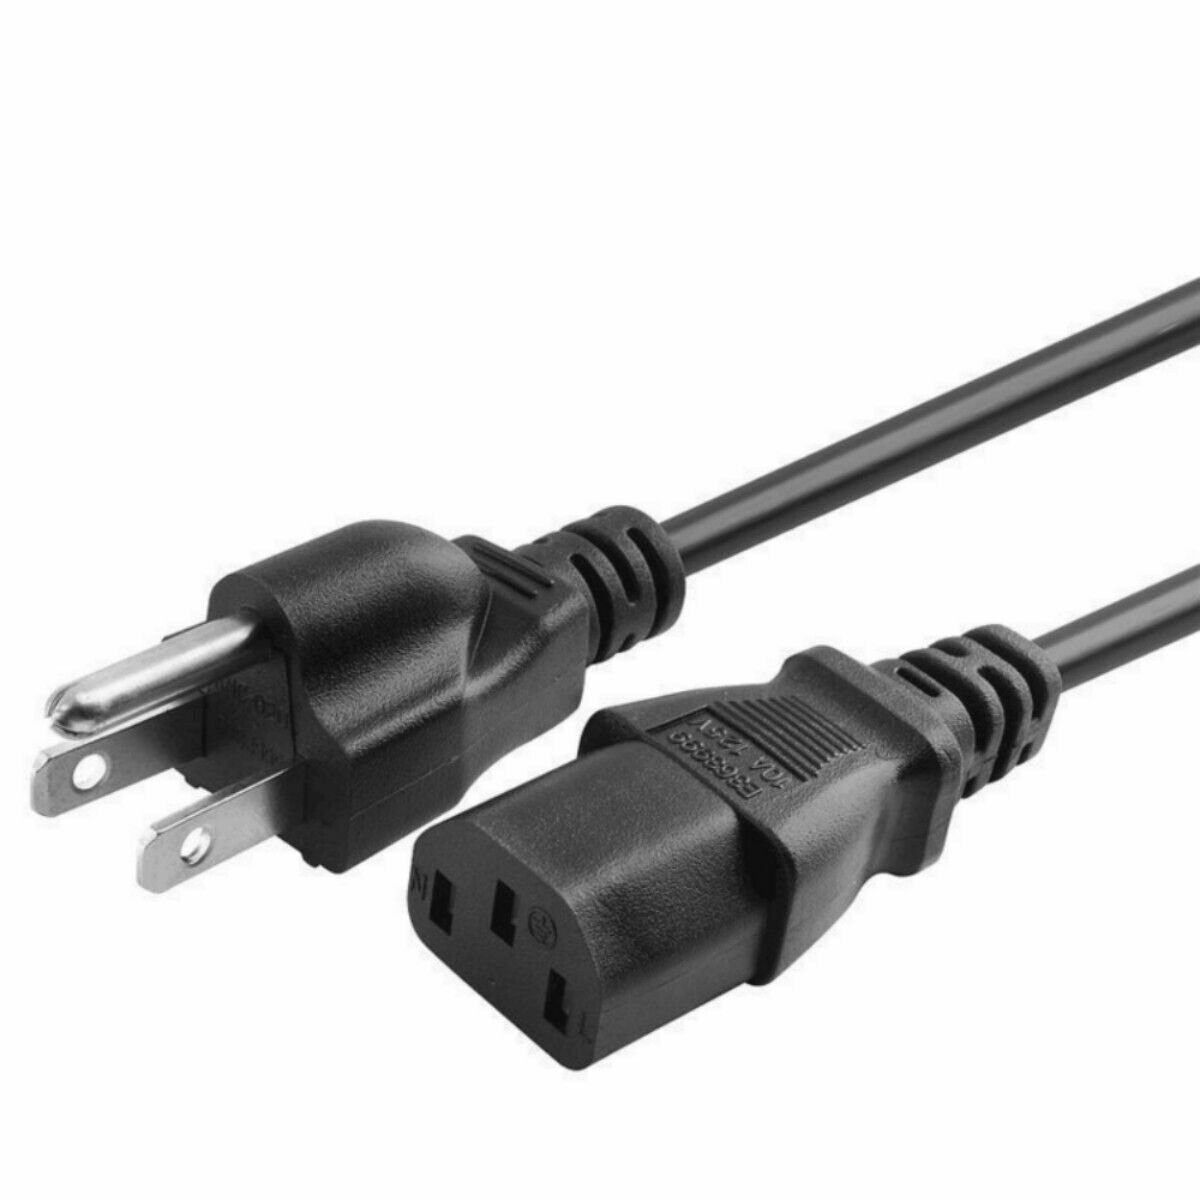 Kircuit 6ft/1.8m AC Power Cord Outlet Socket Cable Plug Lead for Linksys Lgs318 Lgs318p LGS318-UK LGS318-EU 18 Port Smart Gigabit Ethernet Switch - image 1 of 2